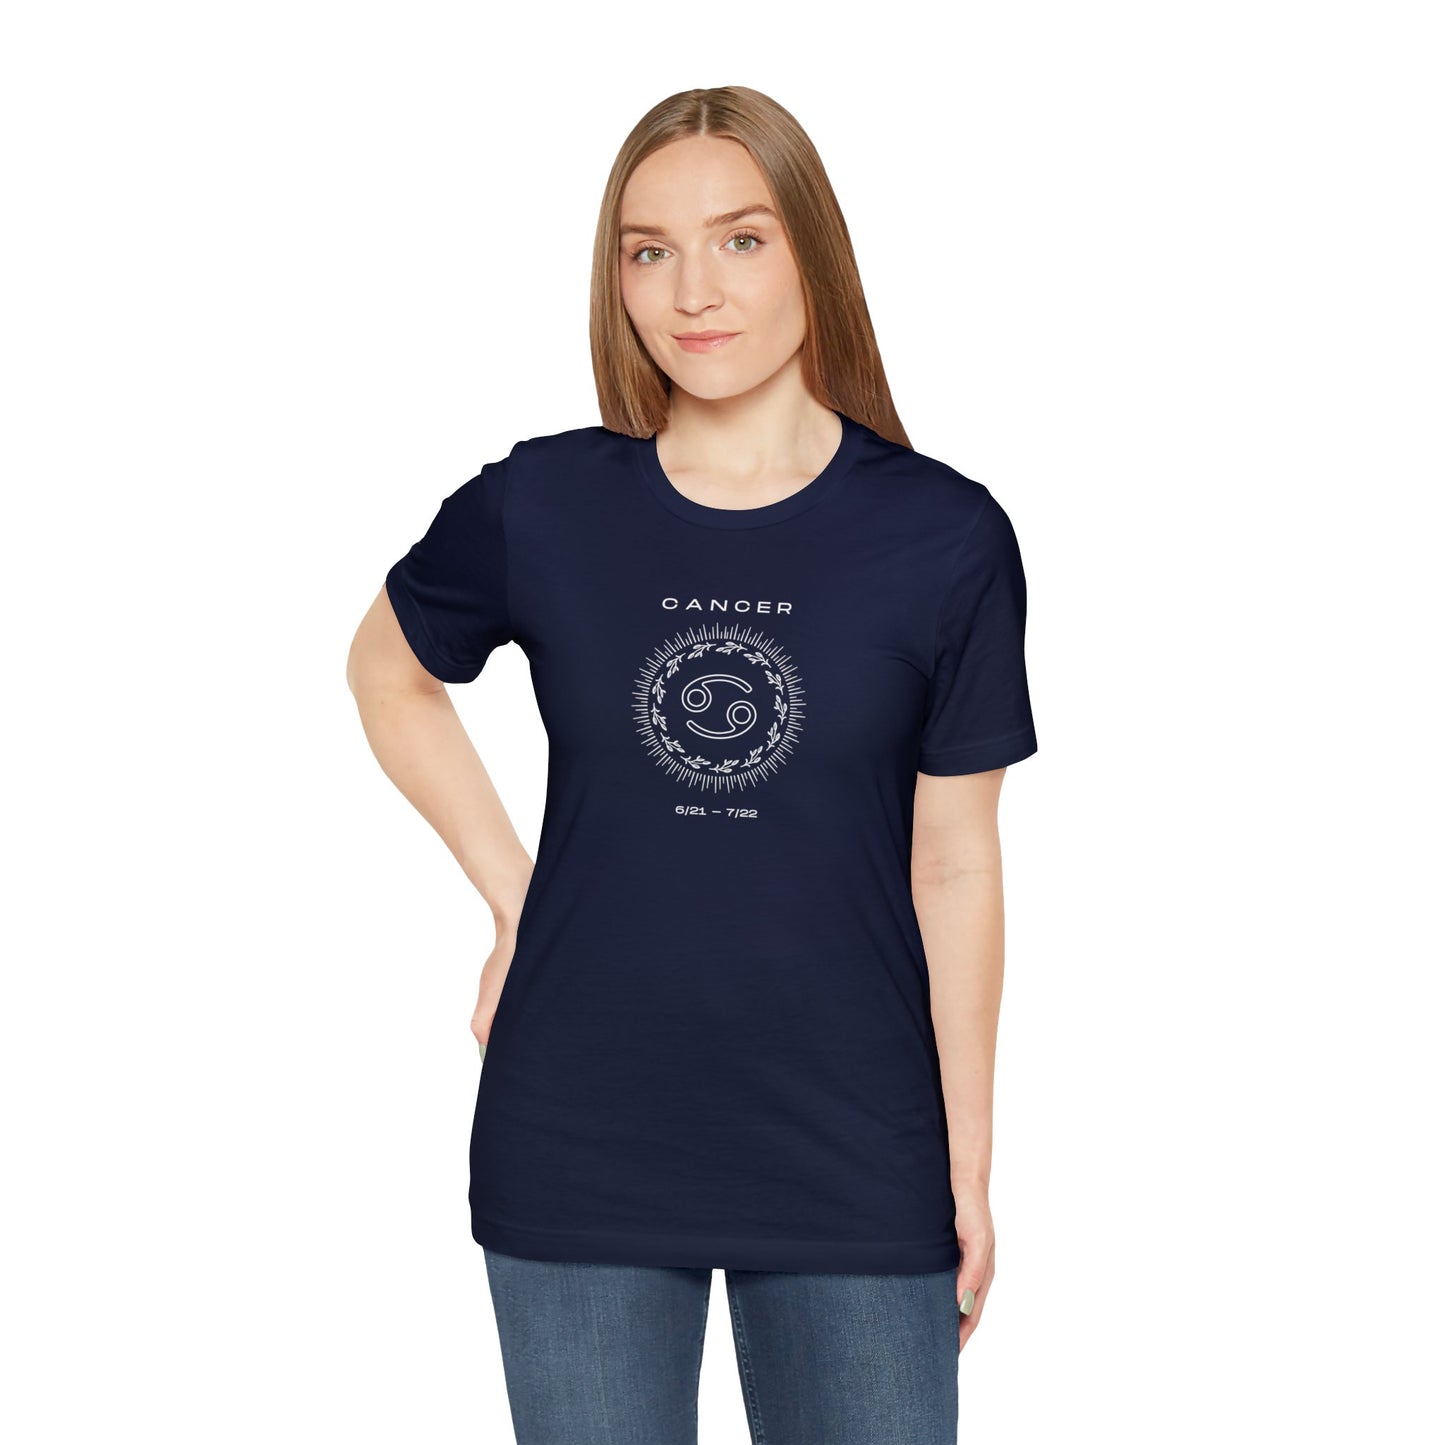 Cancer Zodiac Shirt Unisex Short Sleeve Tee